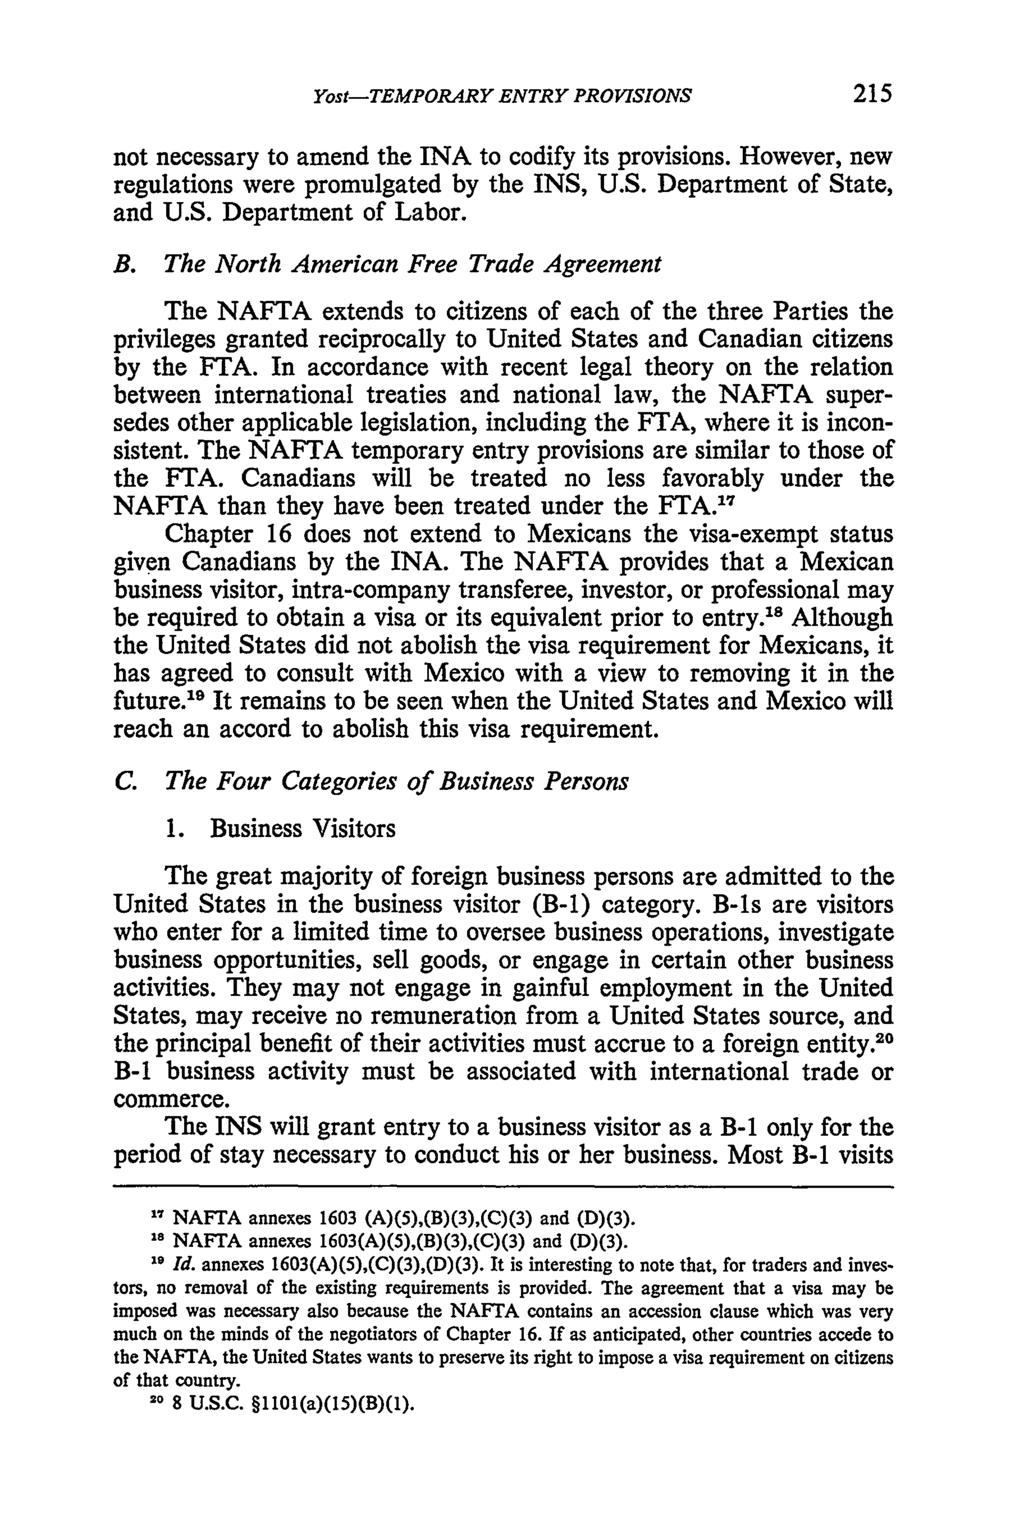 Yost: NAFTA--Temporary Entry Provisions--Immigration Dimensions Yost-TEMPORARY ENTRY PROVISIONS not necessary to amend the INA to codify its provisions.